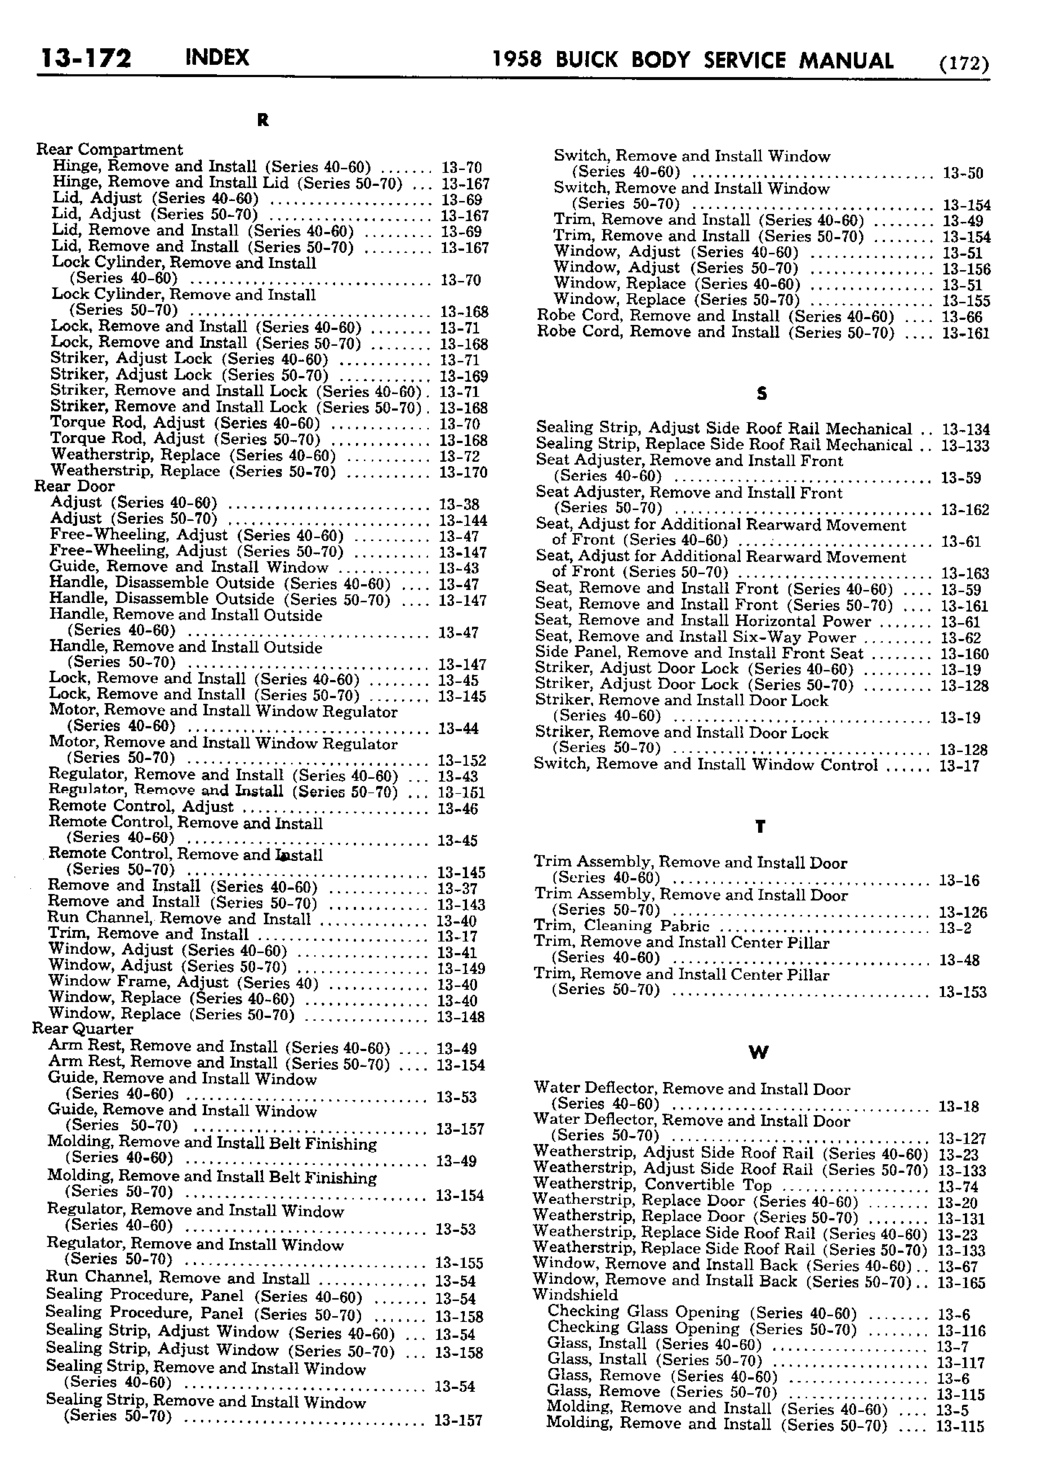 n_1958 Buick Body Service Manual-173-173.jpg